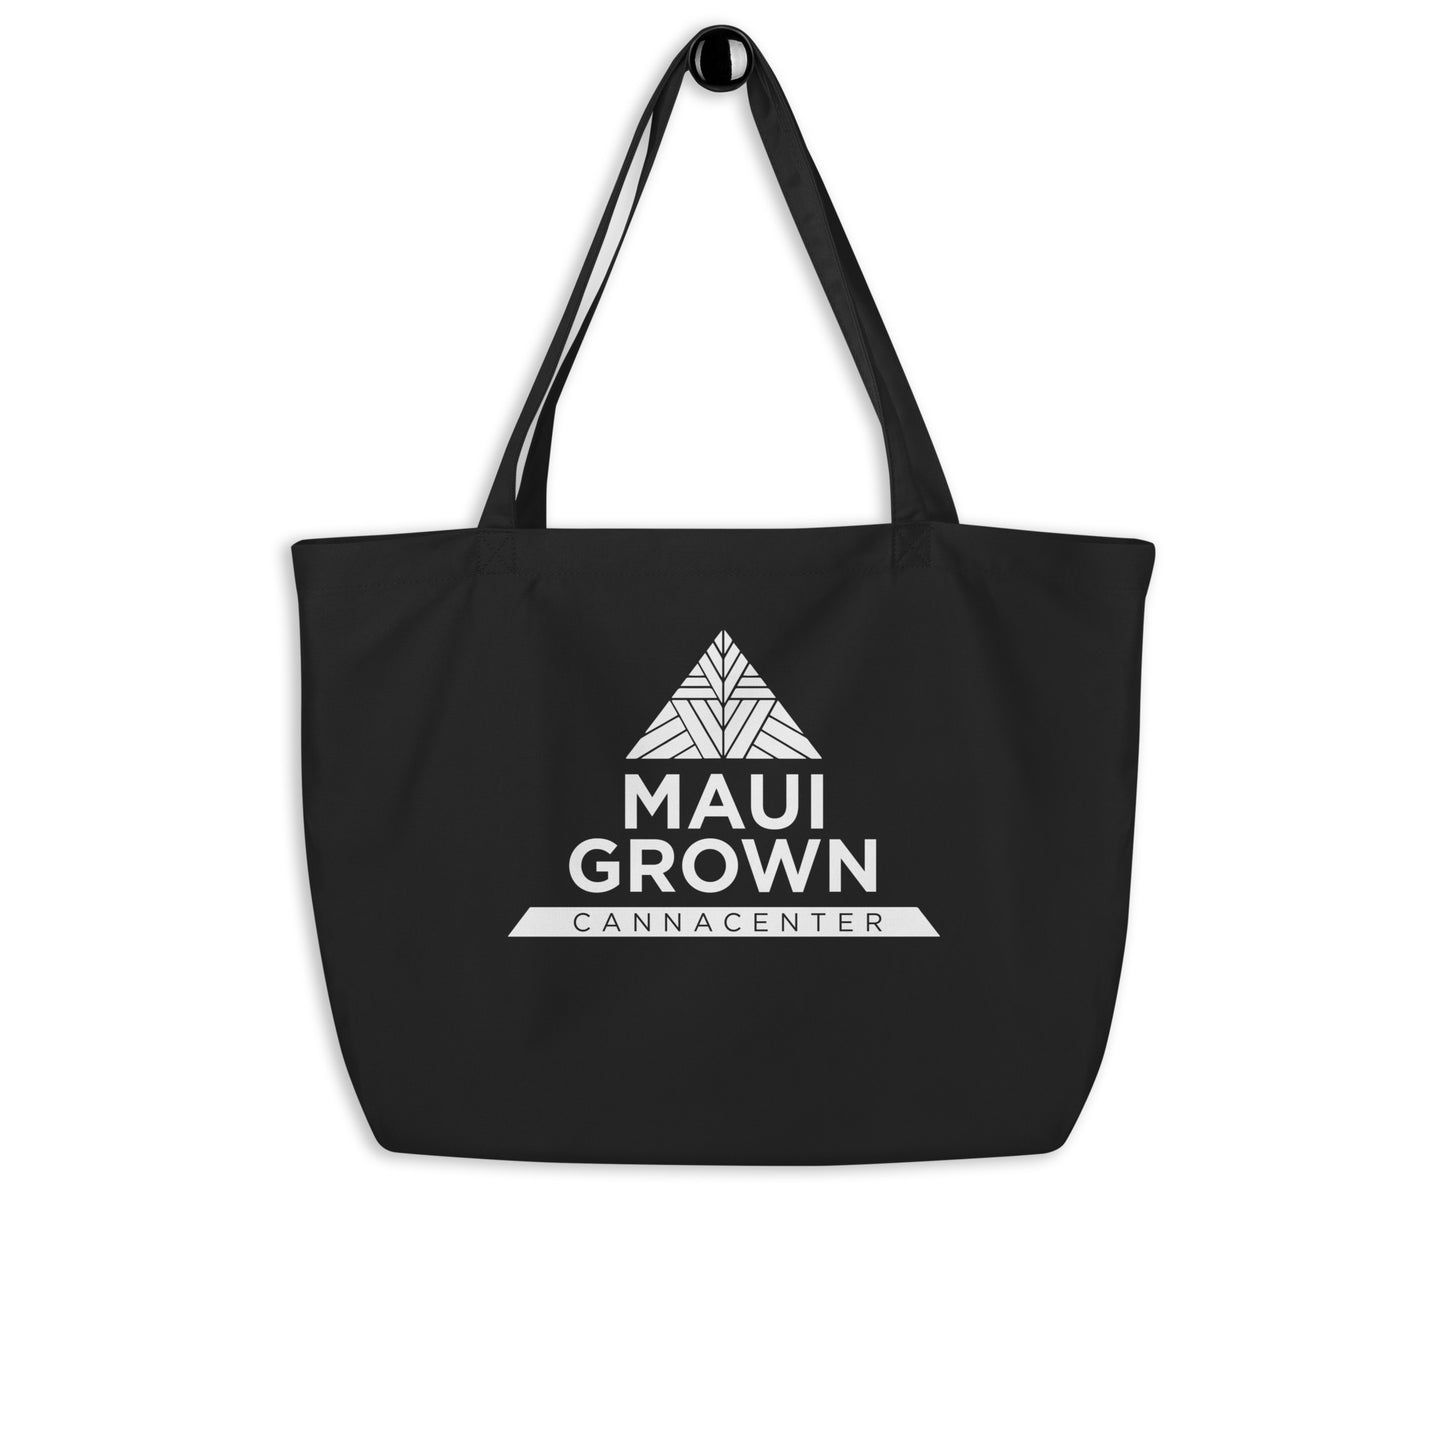 Maui Grown Cannacenter Large Organic Tote Bag - Black